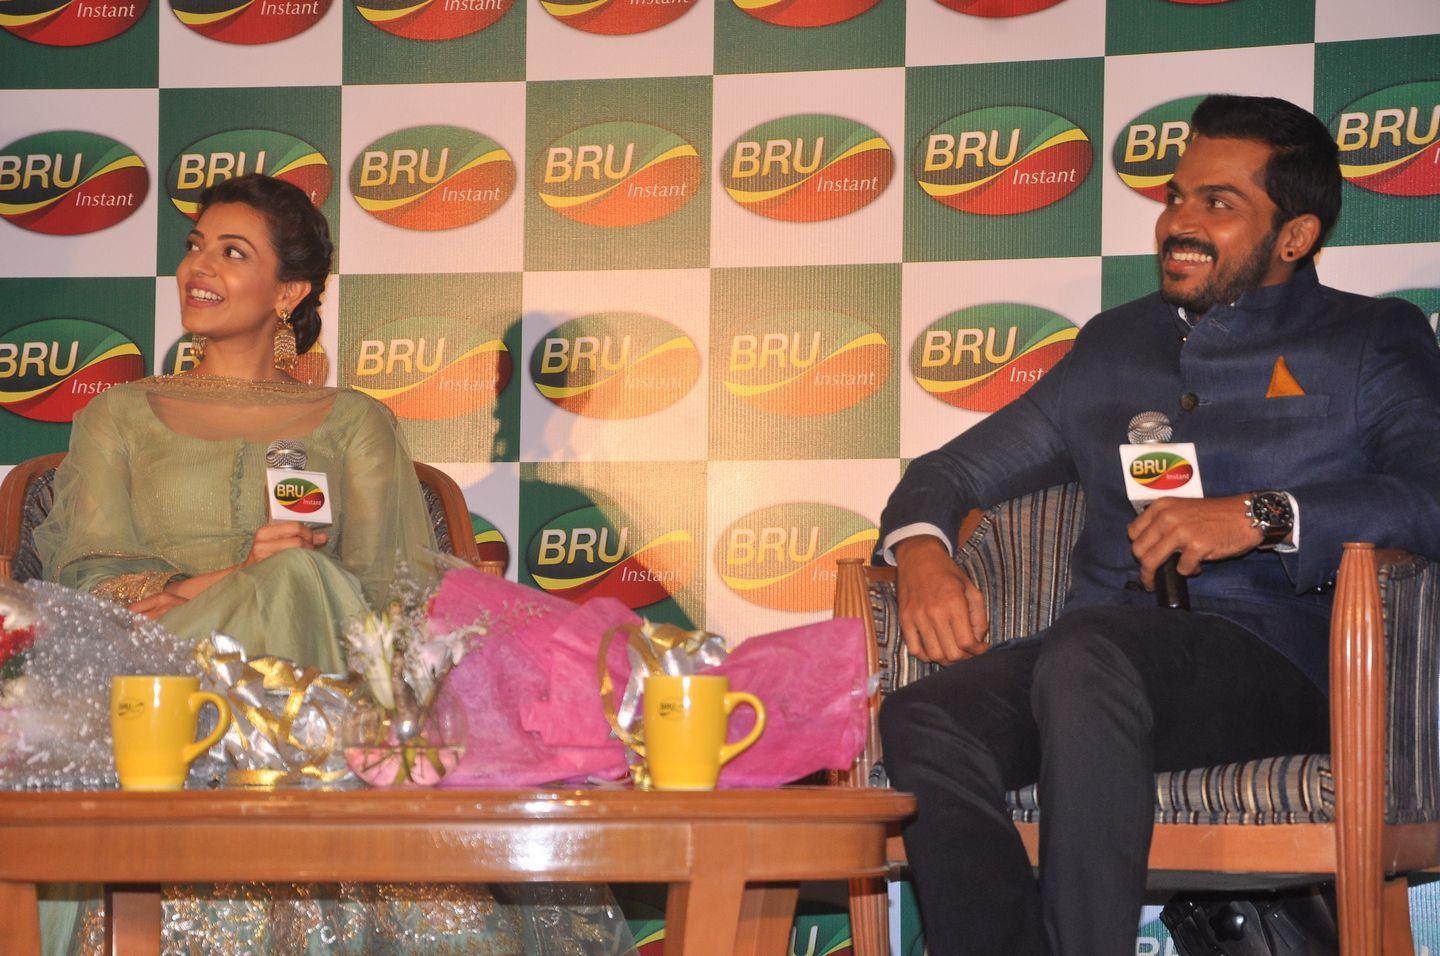 Actor Karthi and kajal Launch in bru Photos